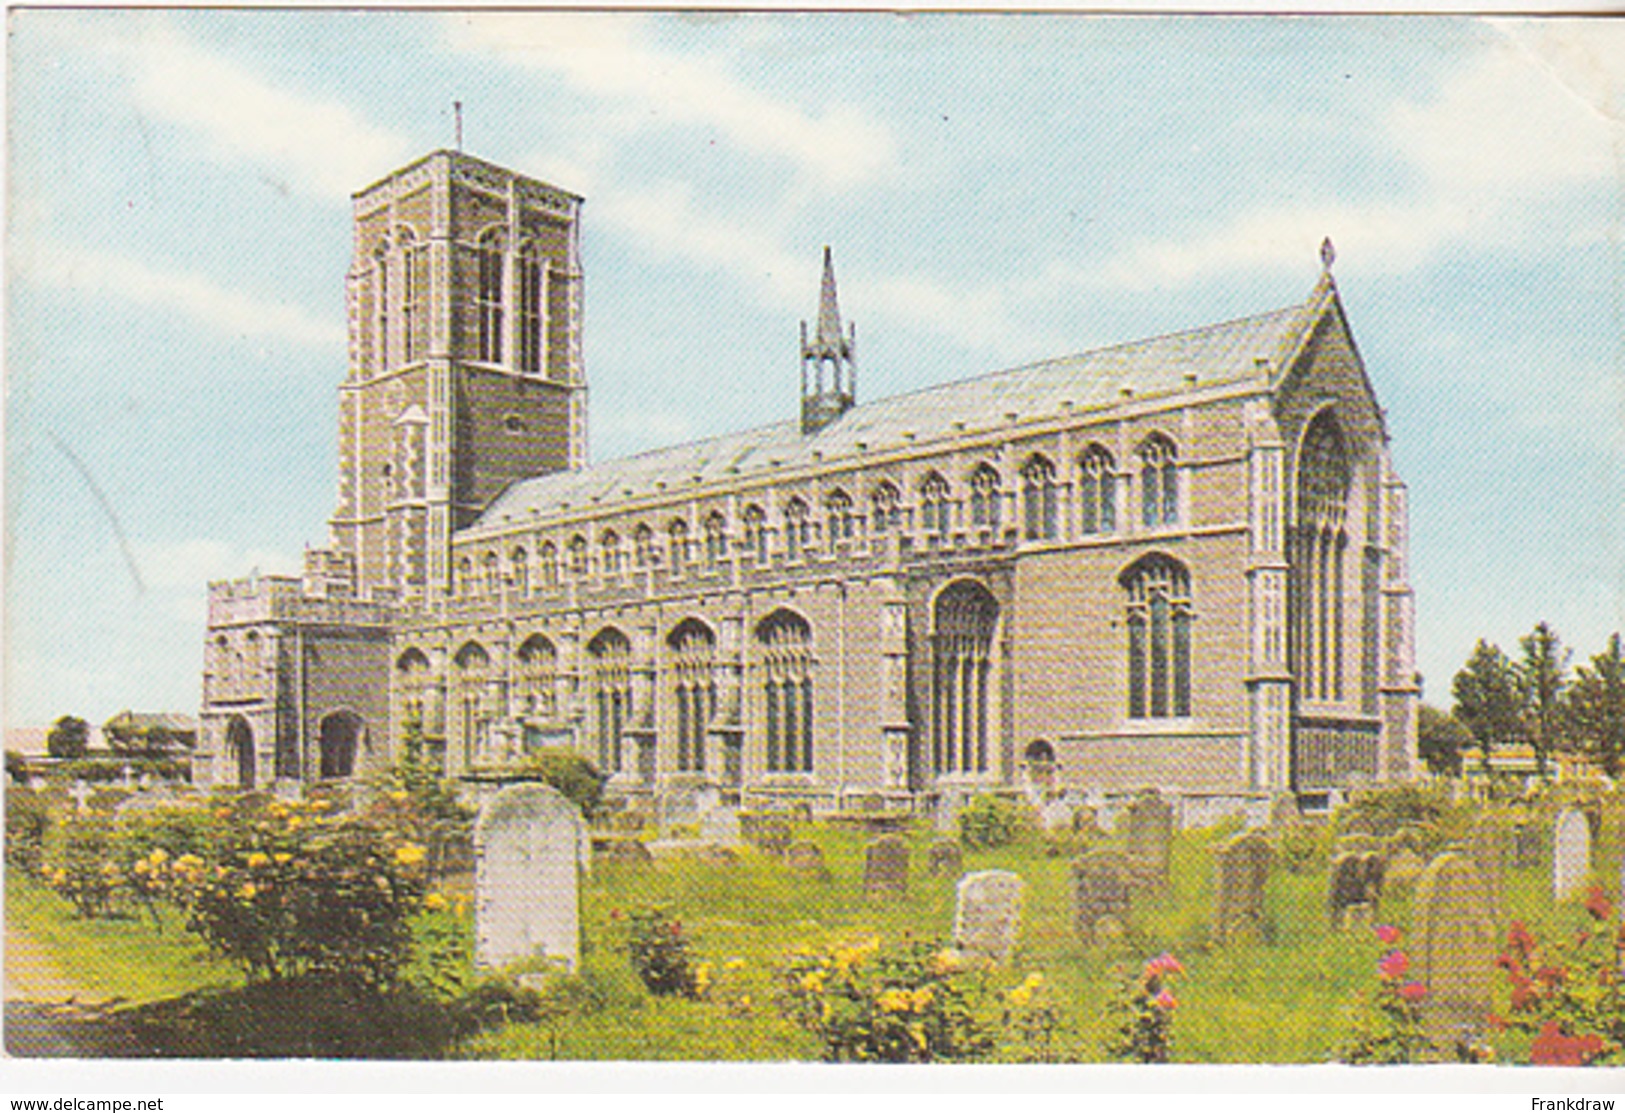 Postcard - St Edmunds Church, Southwold - Card No. 1-31-02-07 - VG - Unclassified